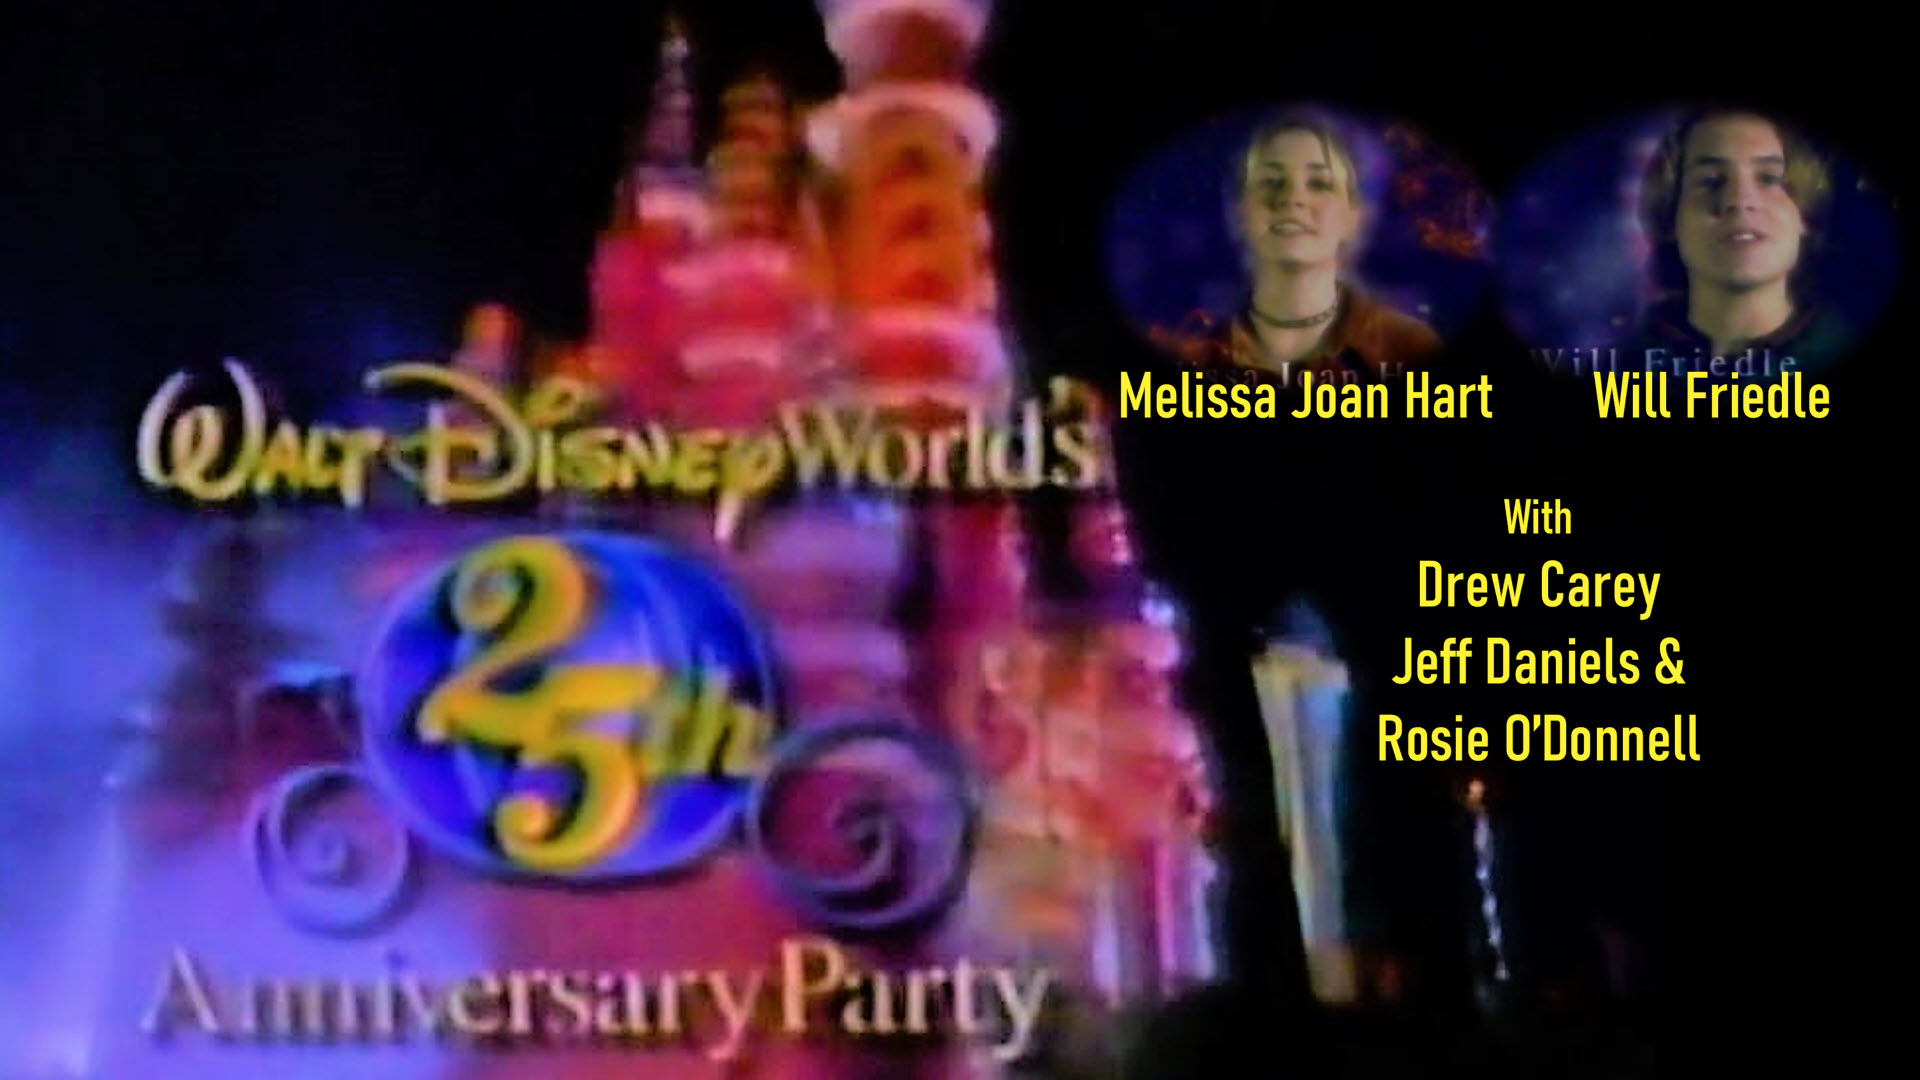 Walt Disney World 25th Anniversary Party (1997)